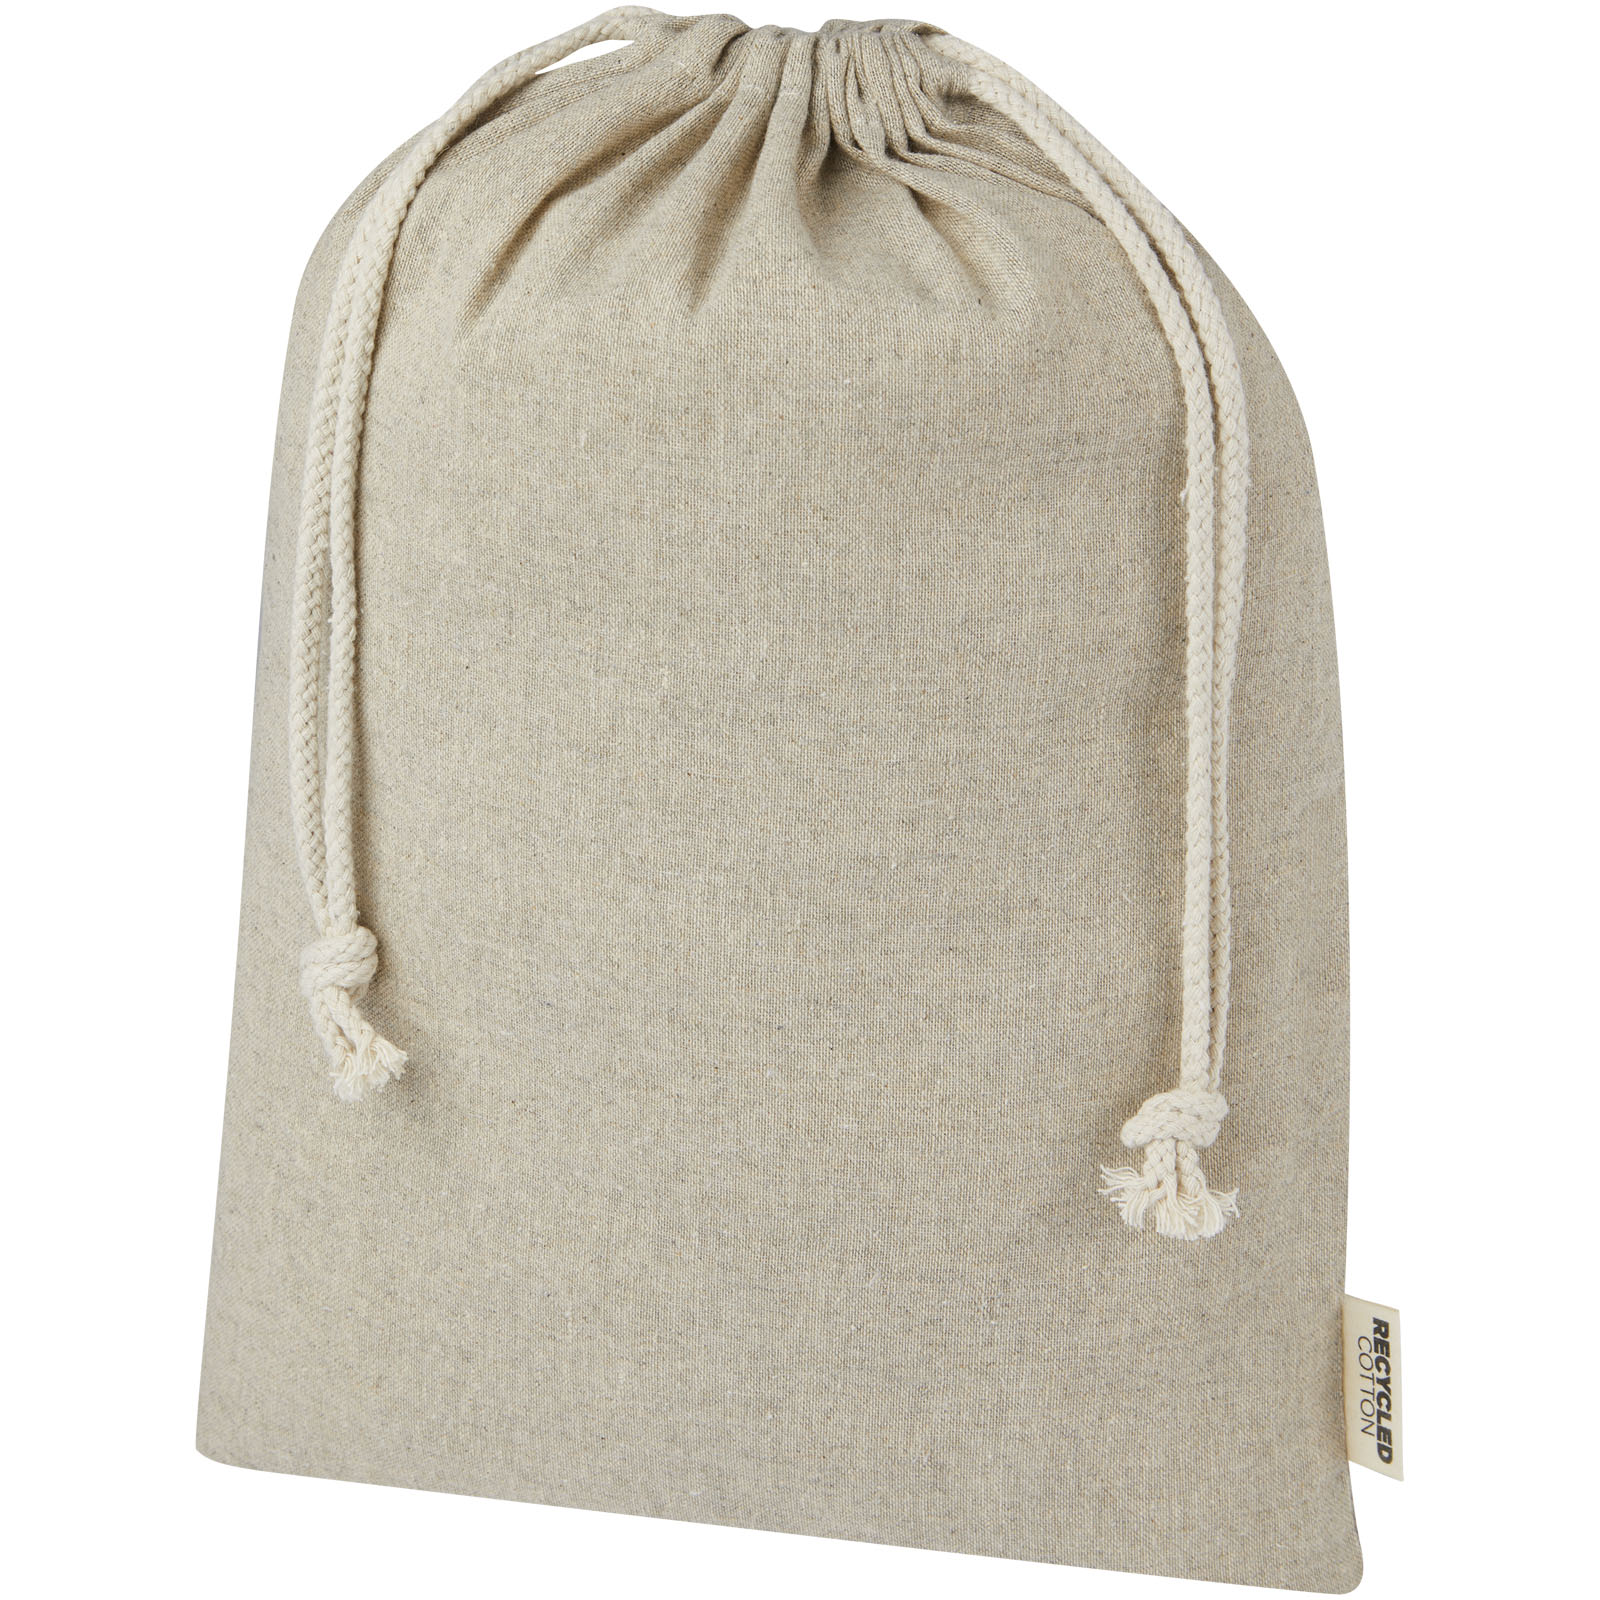 Sacs - Grand sac cadeau Pheebs en coton recyclé GRS 150 g/m² de 4 L